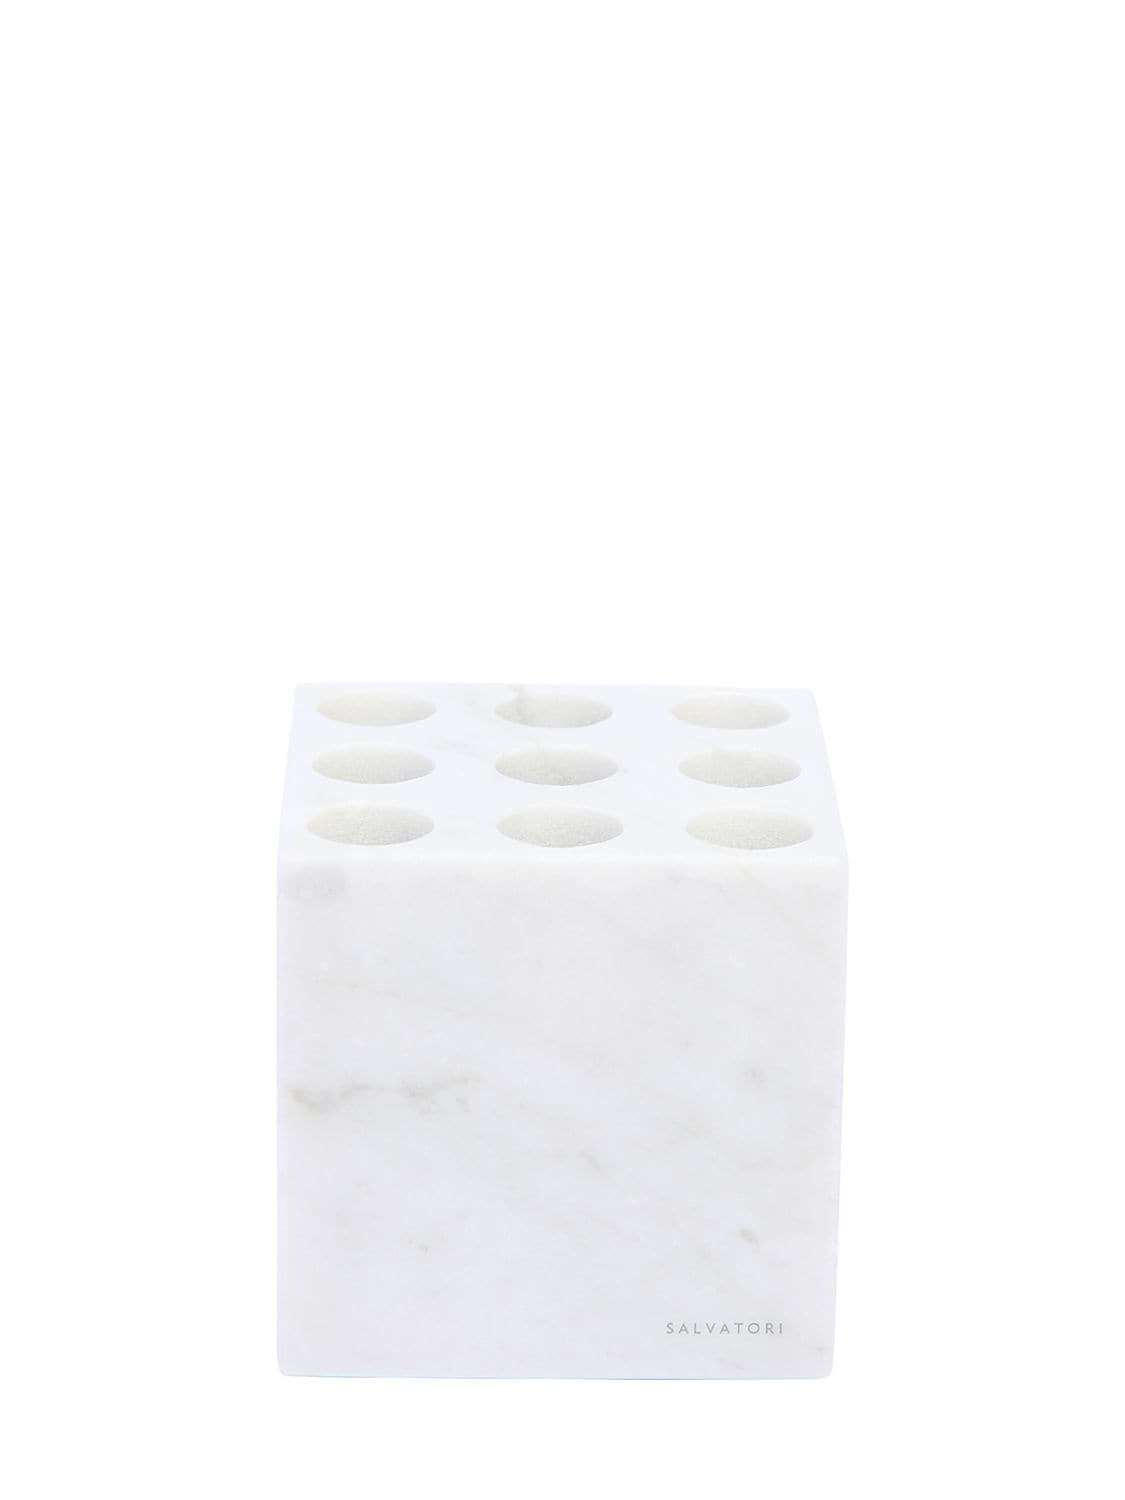 Salvatori Carrara Marble Toothbrush Holder In White